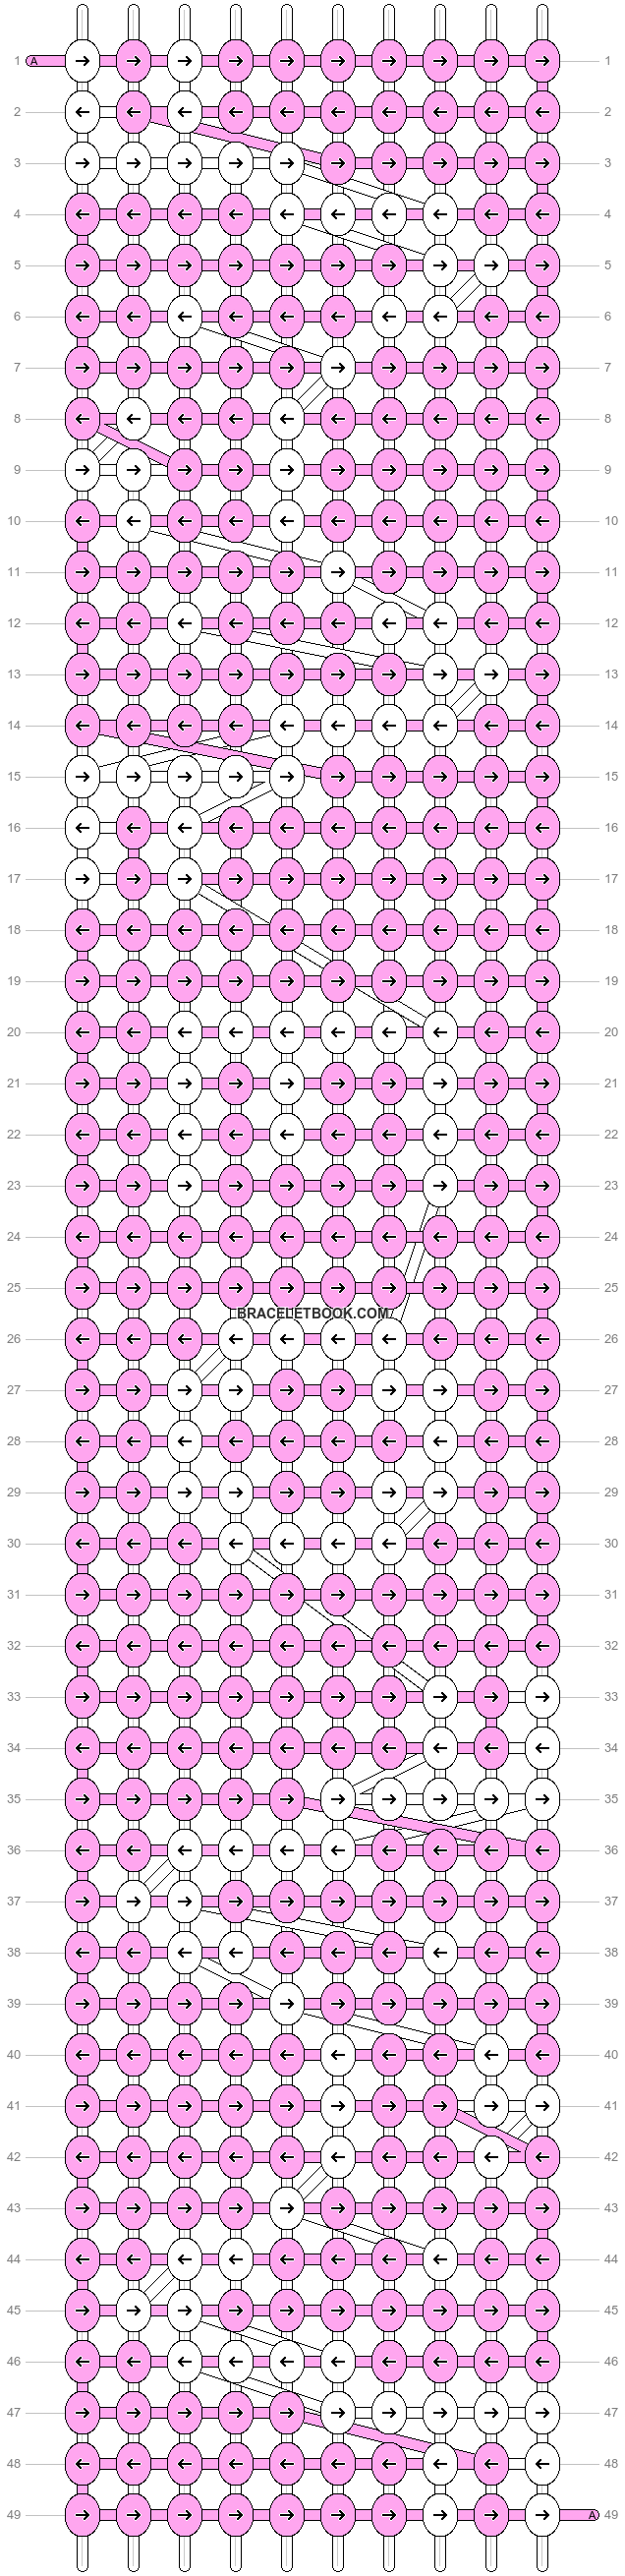 Alpha pattern #29169 variation #42740 pattern